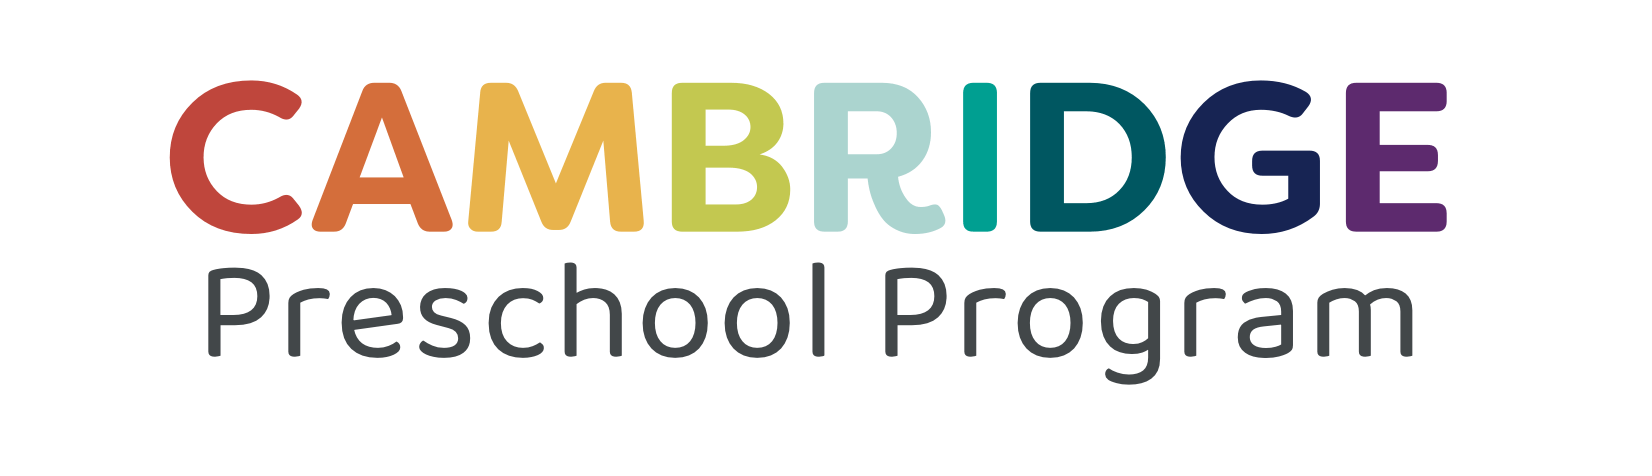 Cambridge Preschool Program Logo